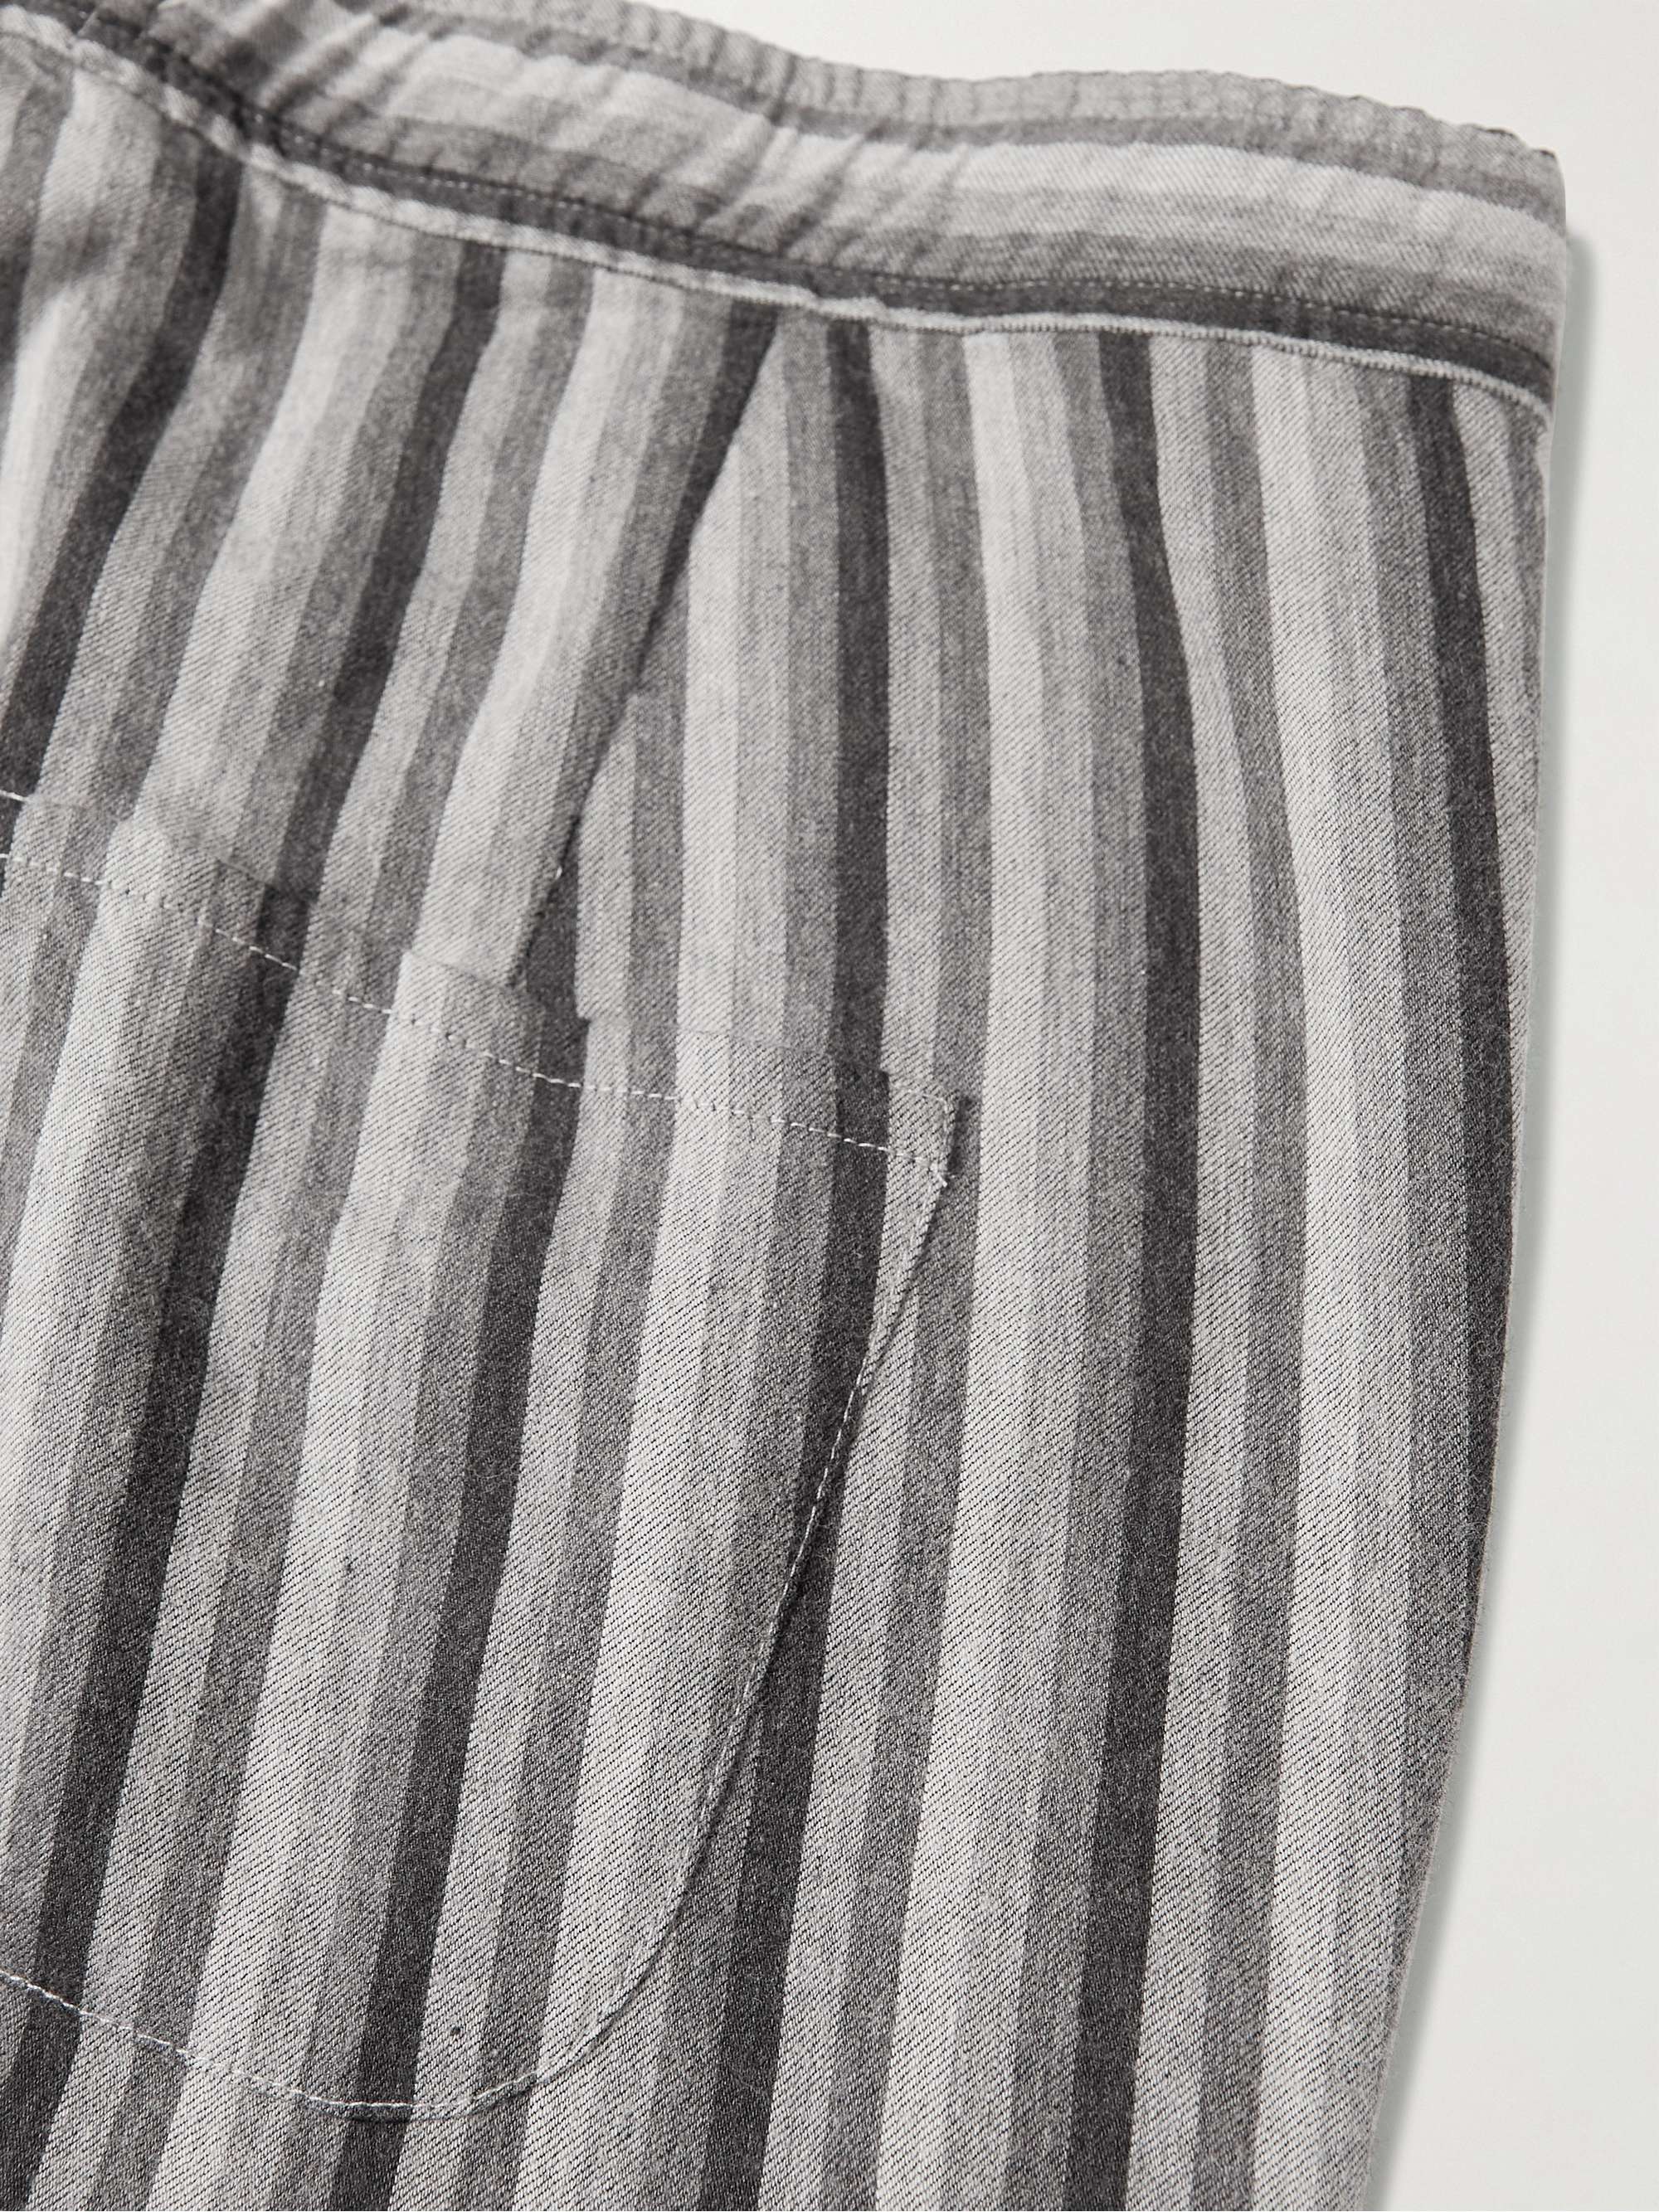 OLIVER SPENCER LOUNGEWEAR Striped Cotton Pyjama Trousers